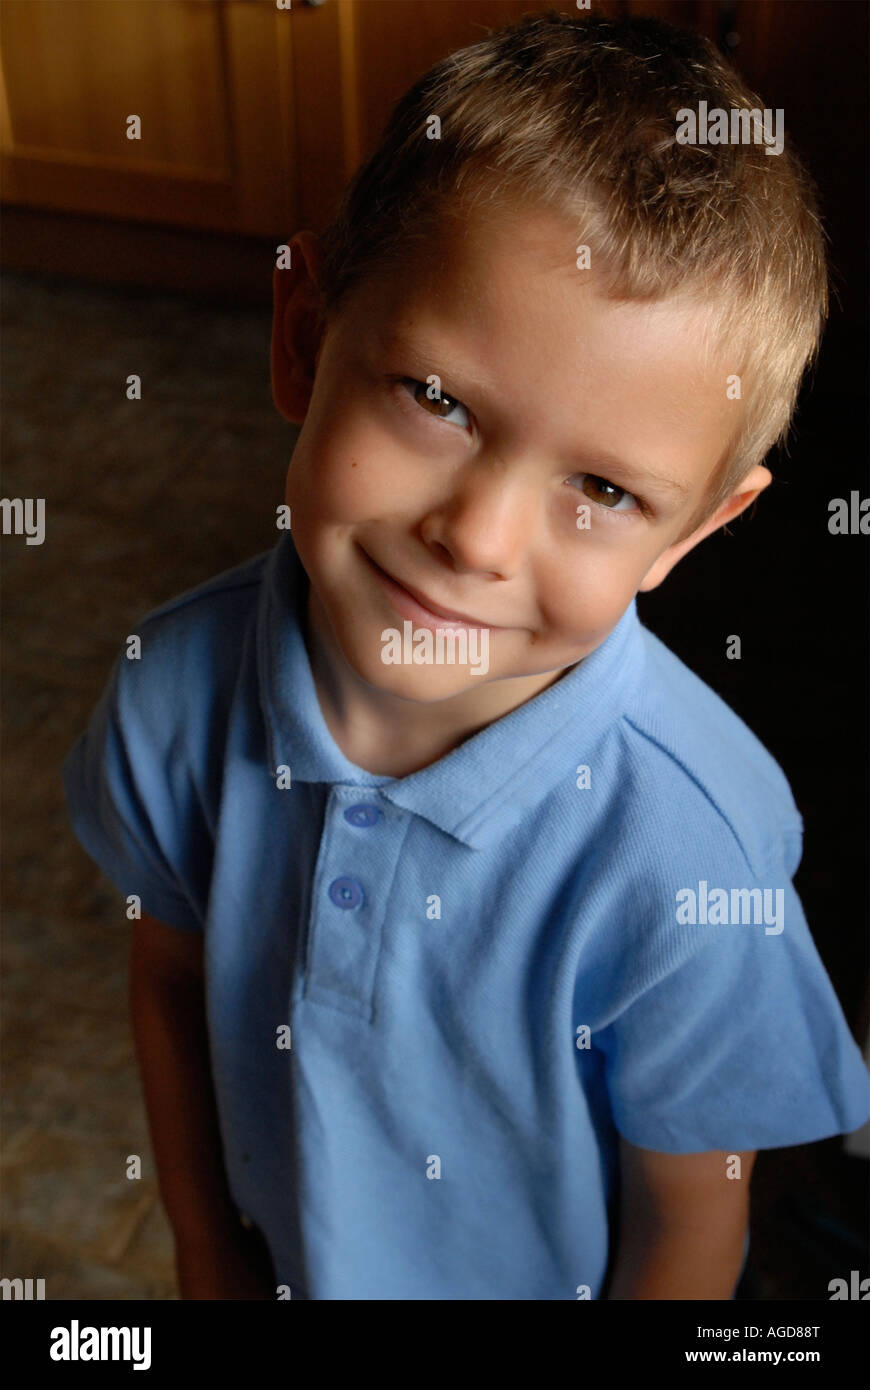 Portrait of a little boy with blonde hair wearing school uniform Stock Photo